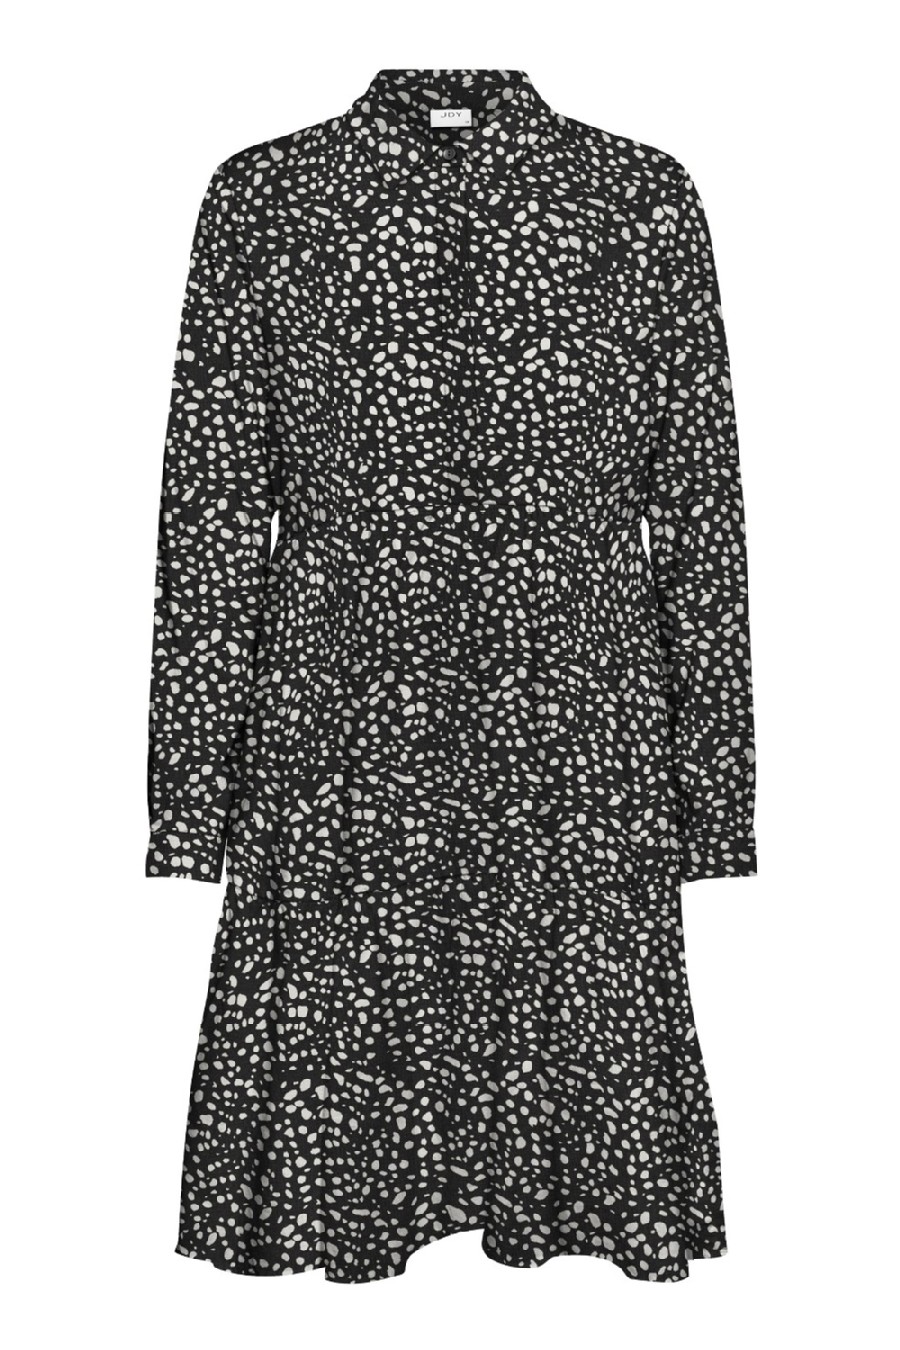  Платье JACQUELINE DE YONG 15221987-Black-ABSTRAC